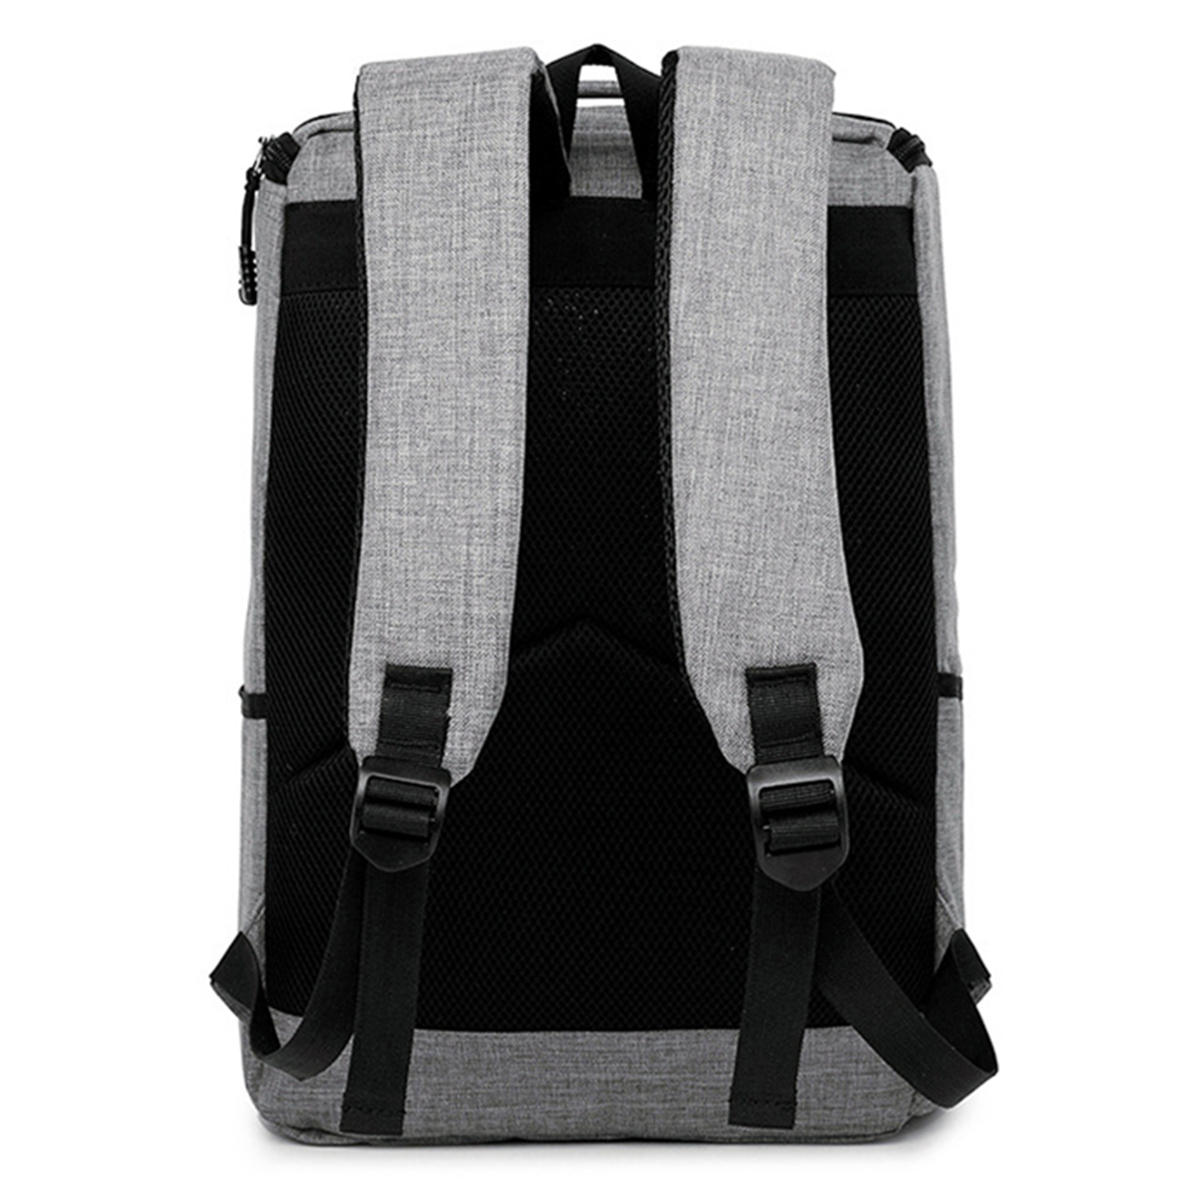 16 Inch Laptop Backpack Oxford Satchel Rucksack Student School Bag Camping Travel Women Men